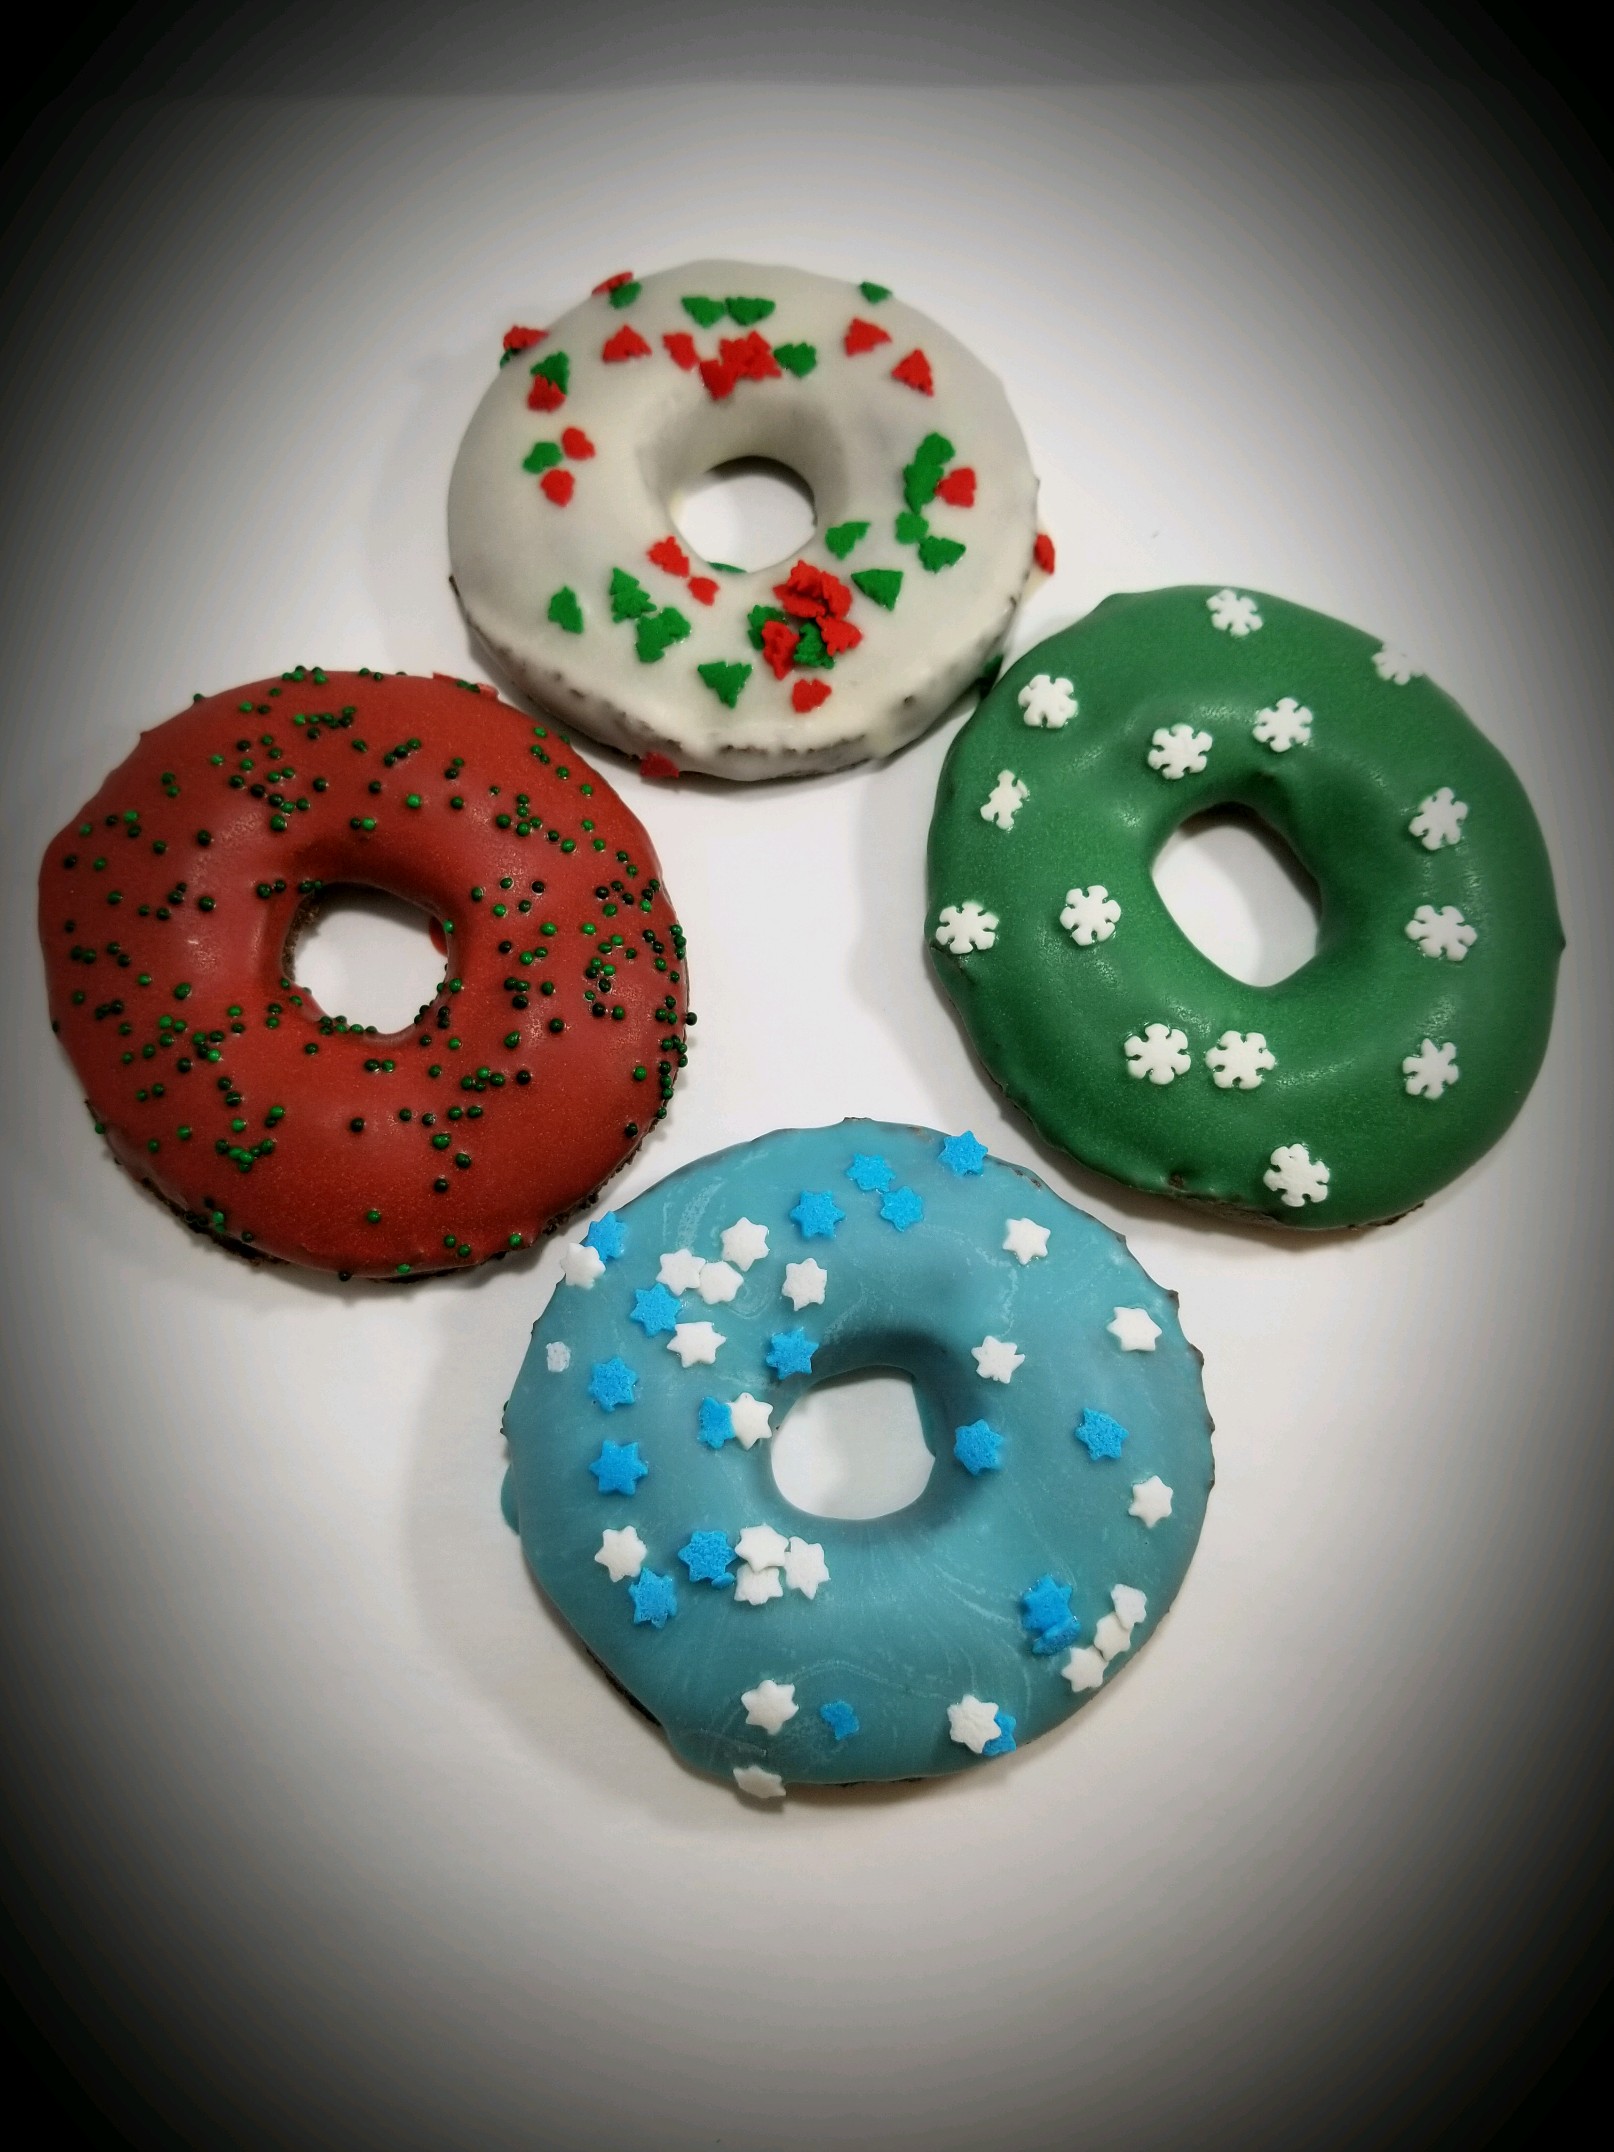 Christmas Doughnuts  - Tray of 22 *